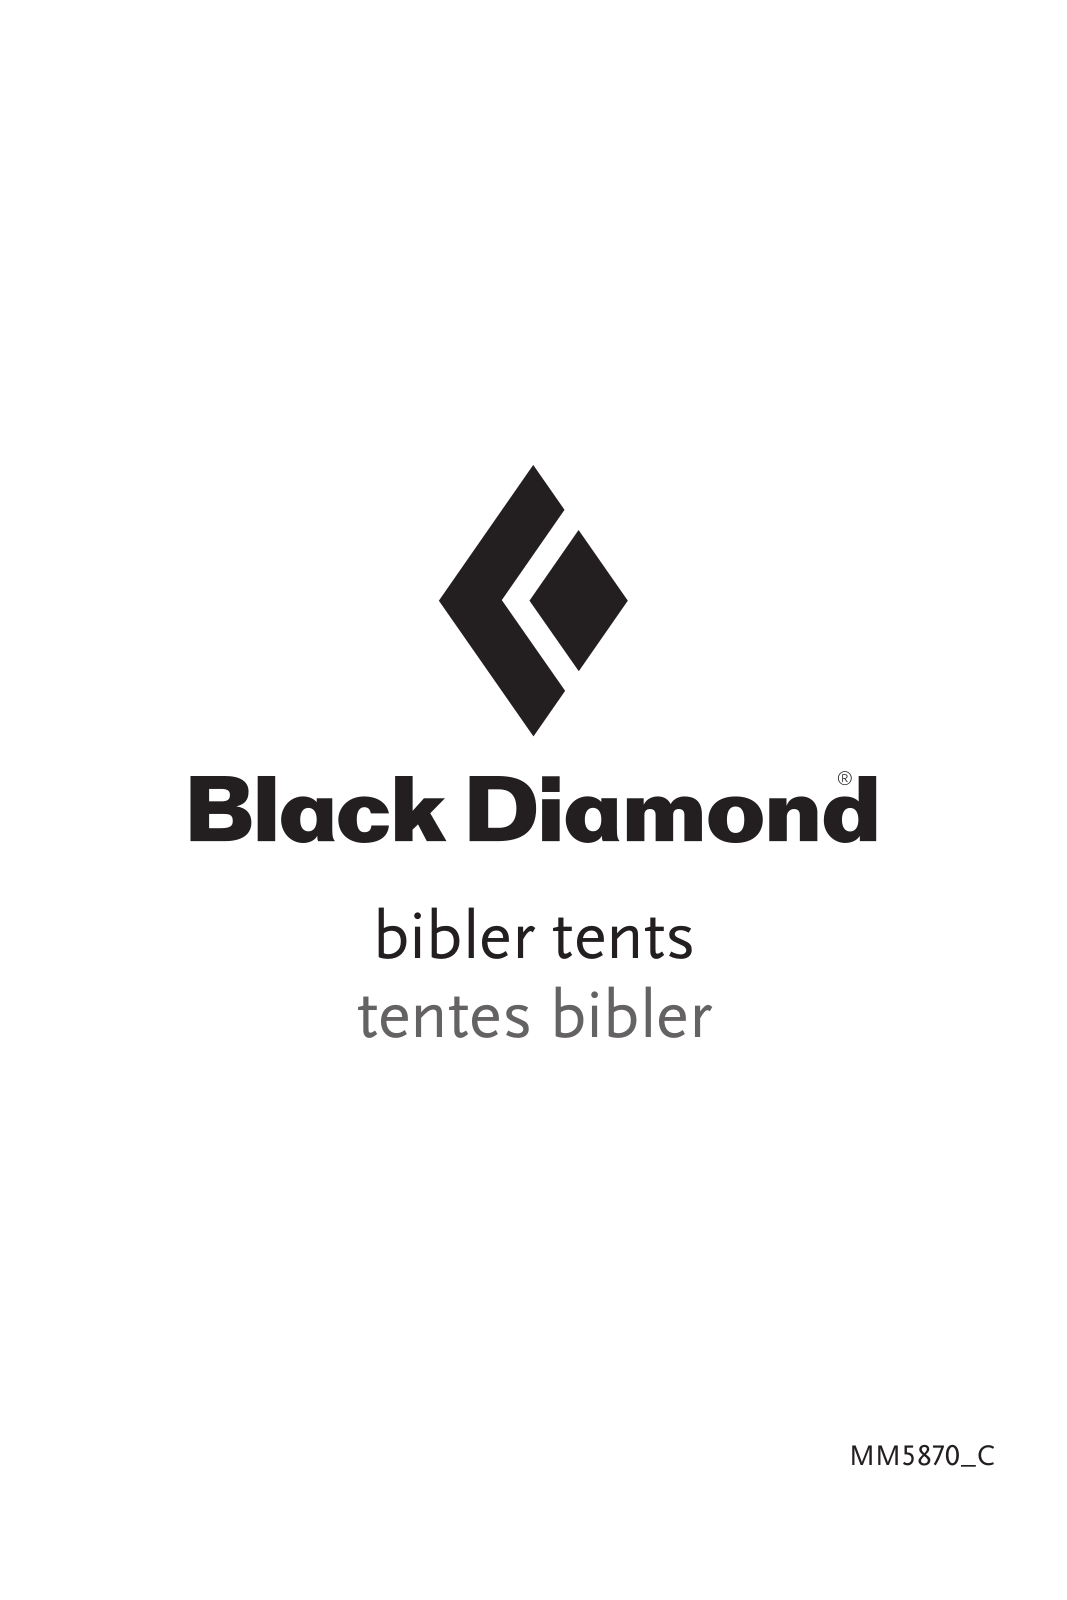 Black Diamond Equipment Bibler, Bombshelter, Fitzroy, Ahwahnee, I-tent Manual